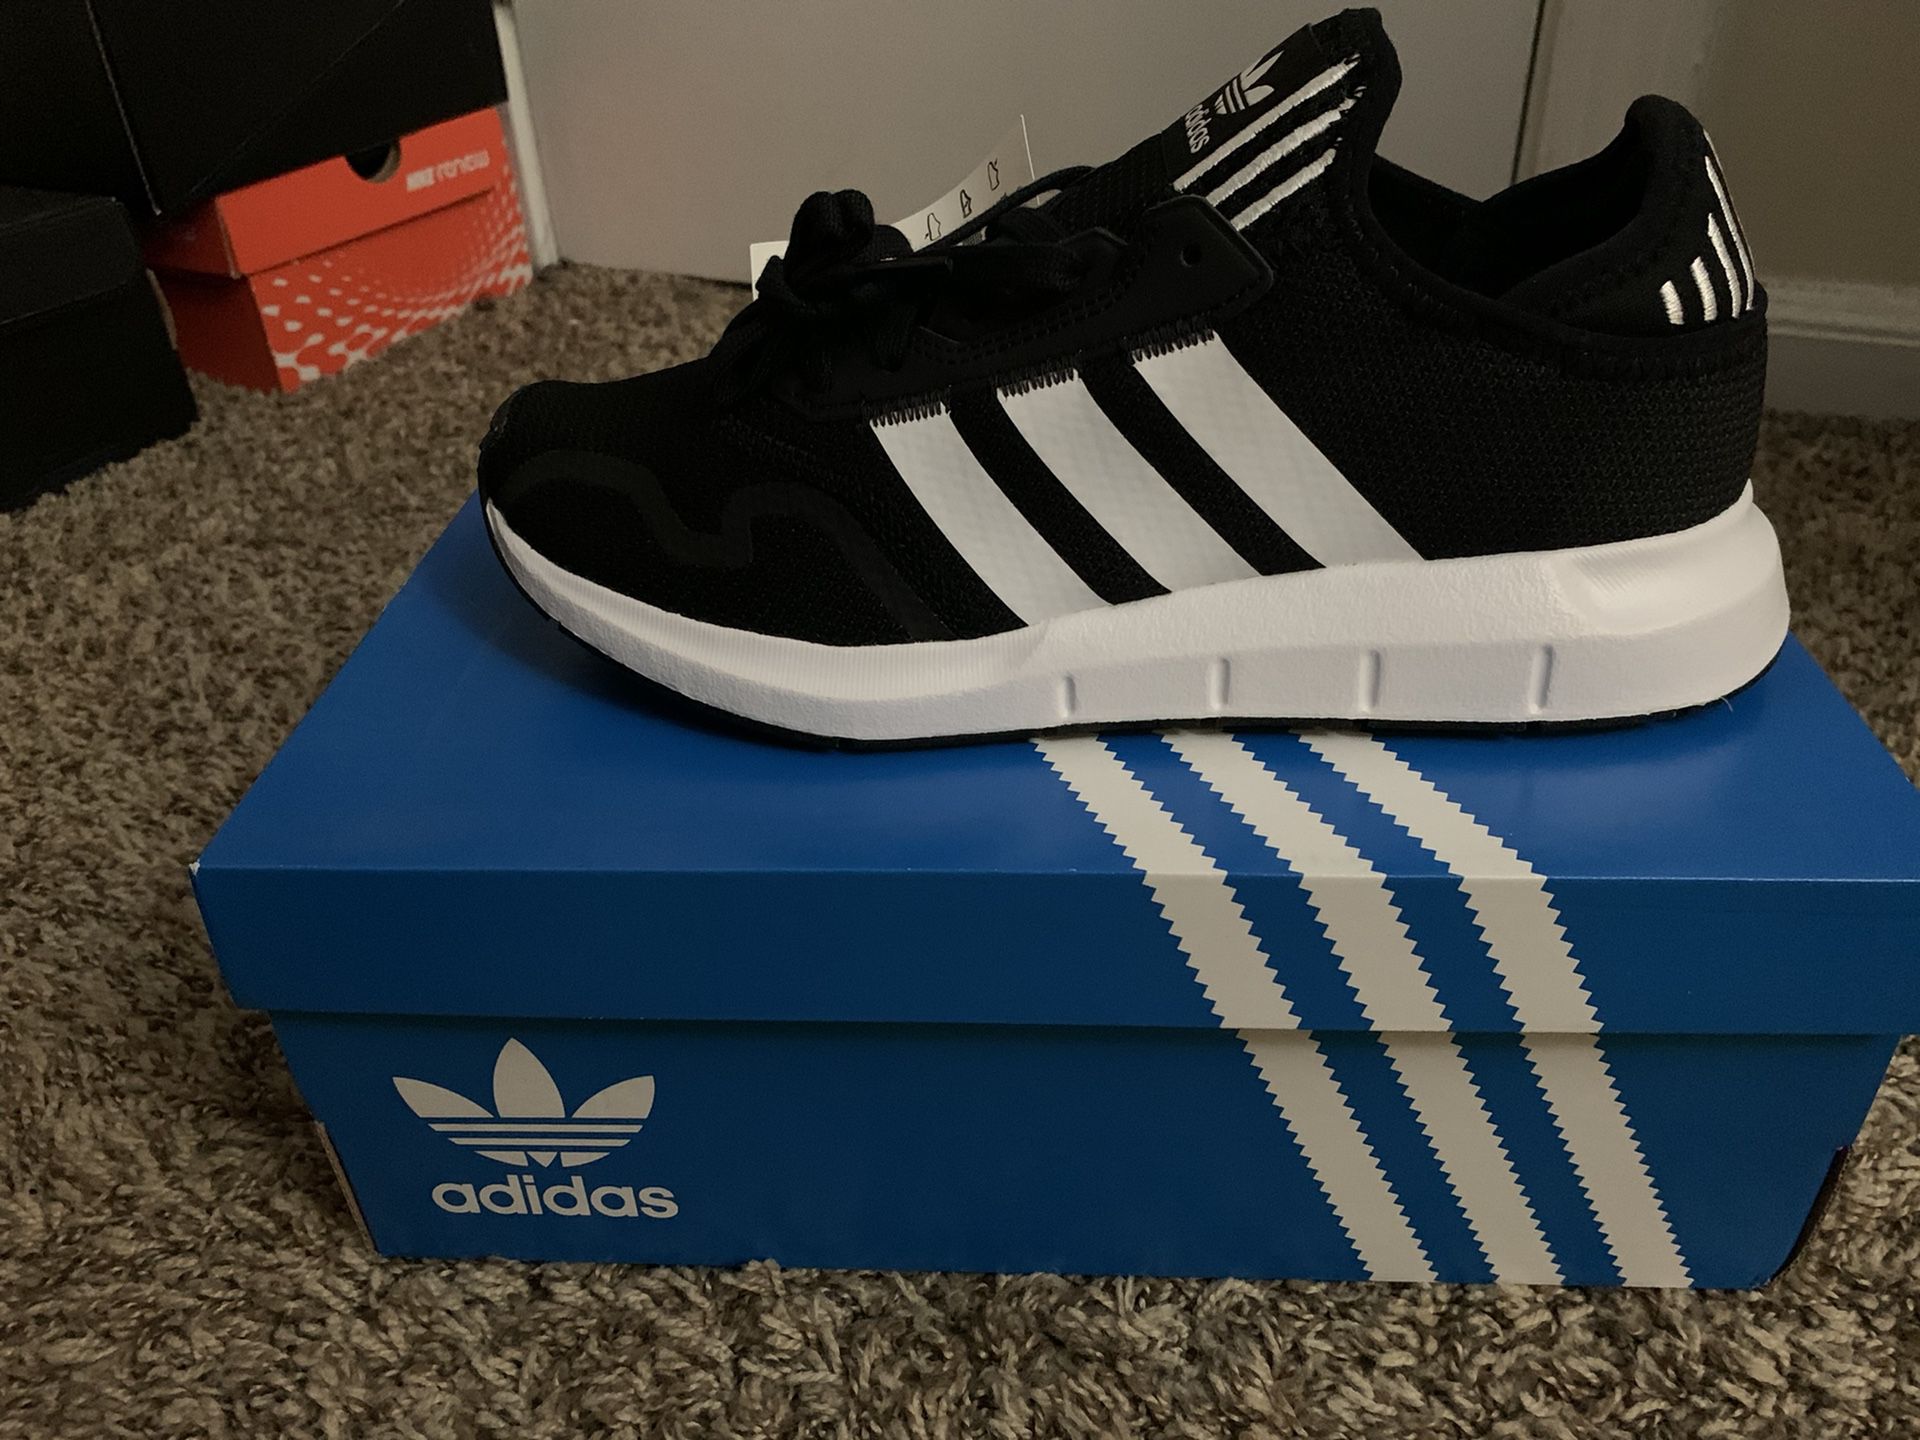 Adidas Running Shoe Size 9